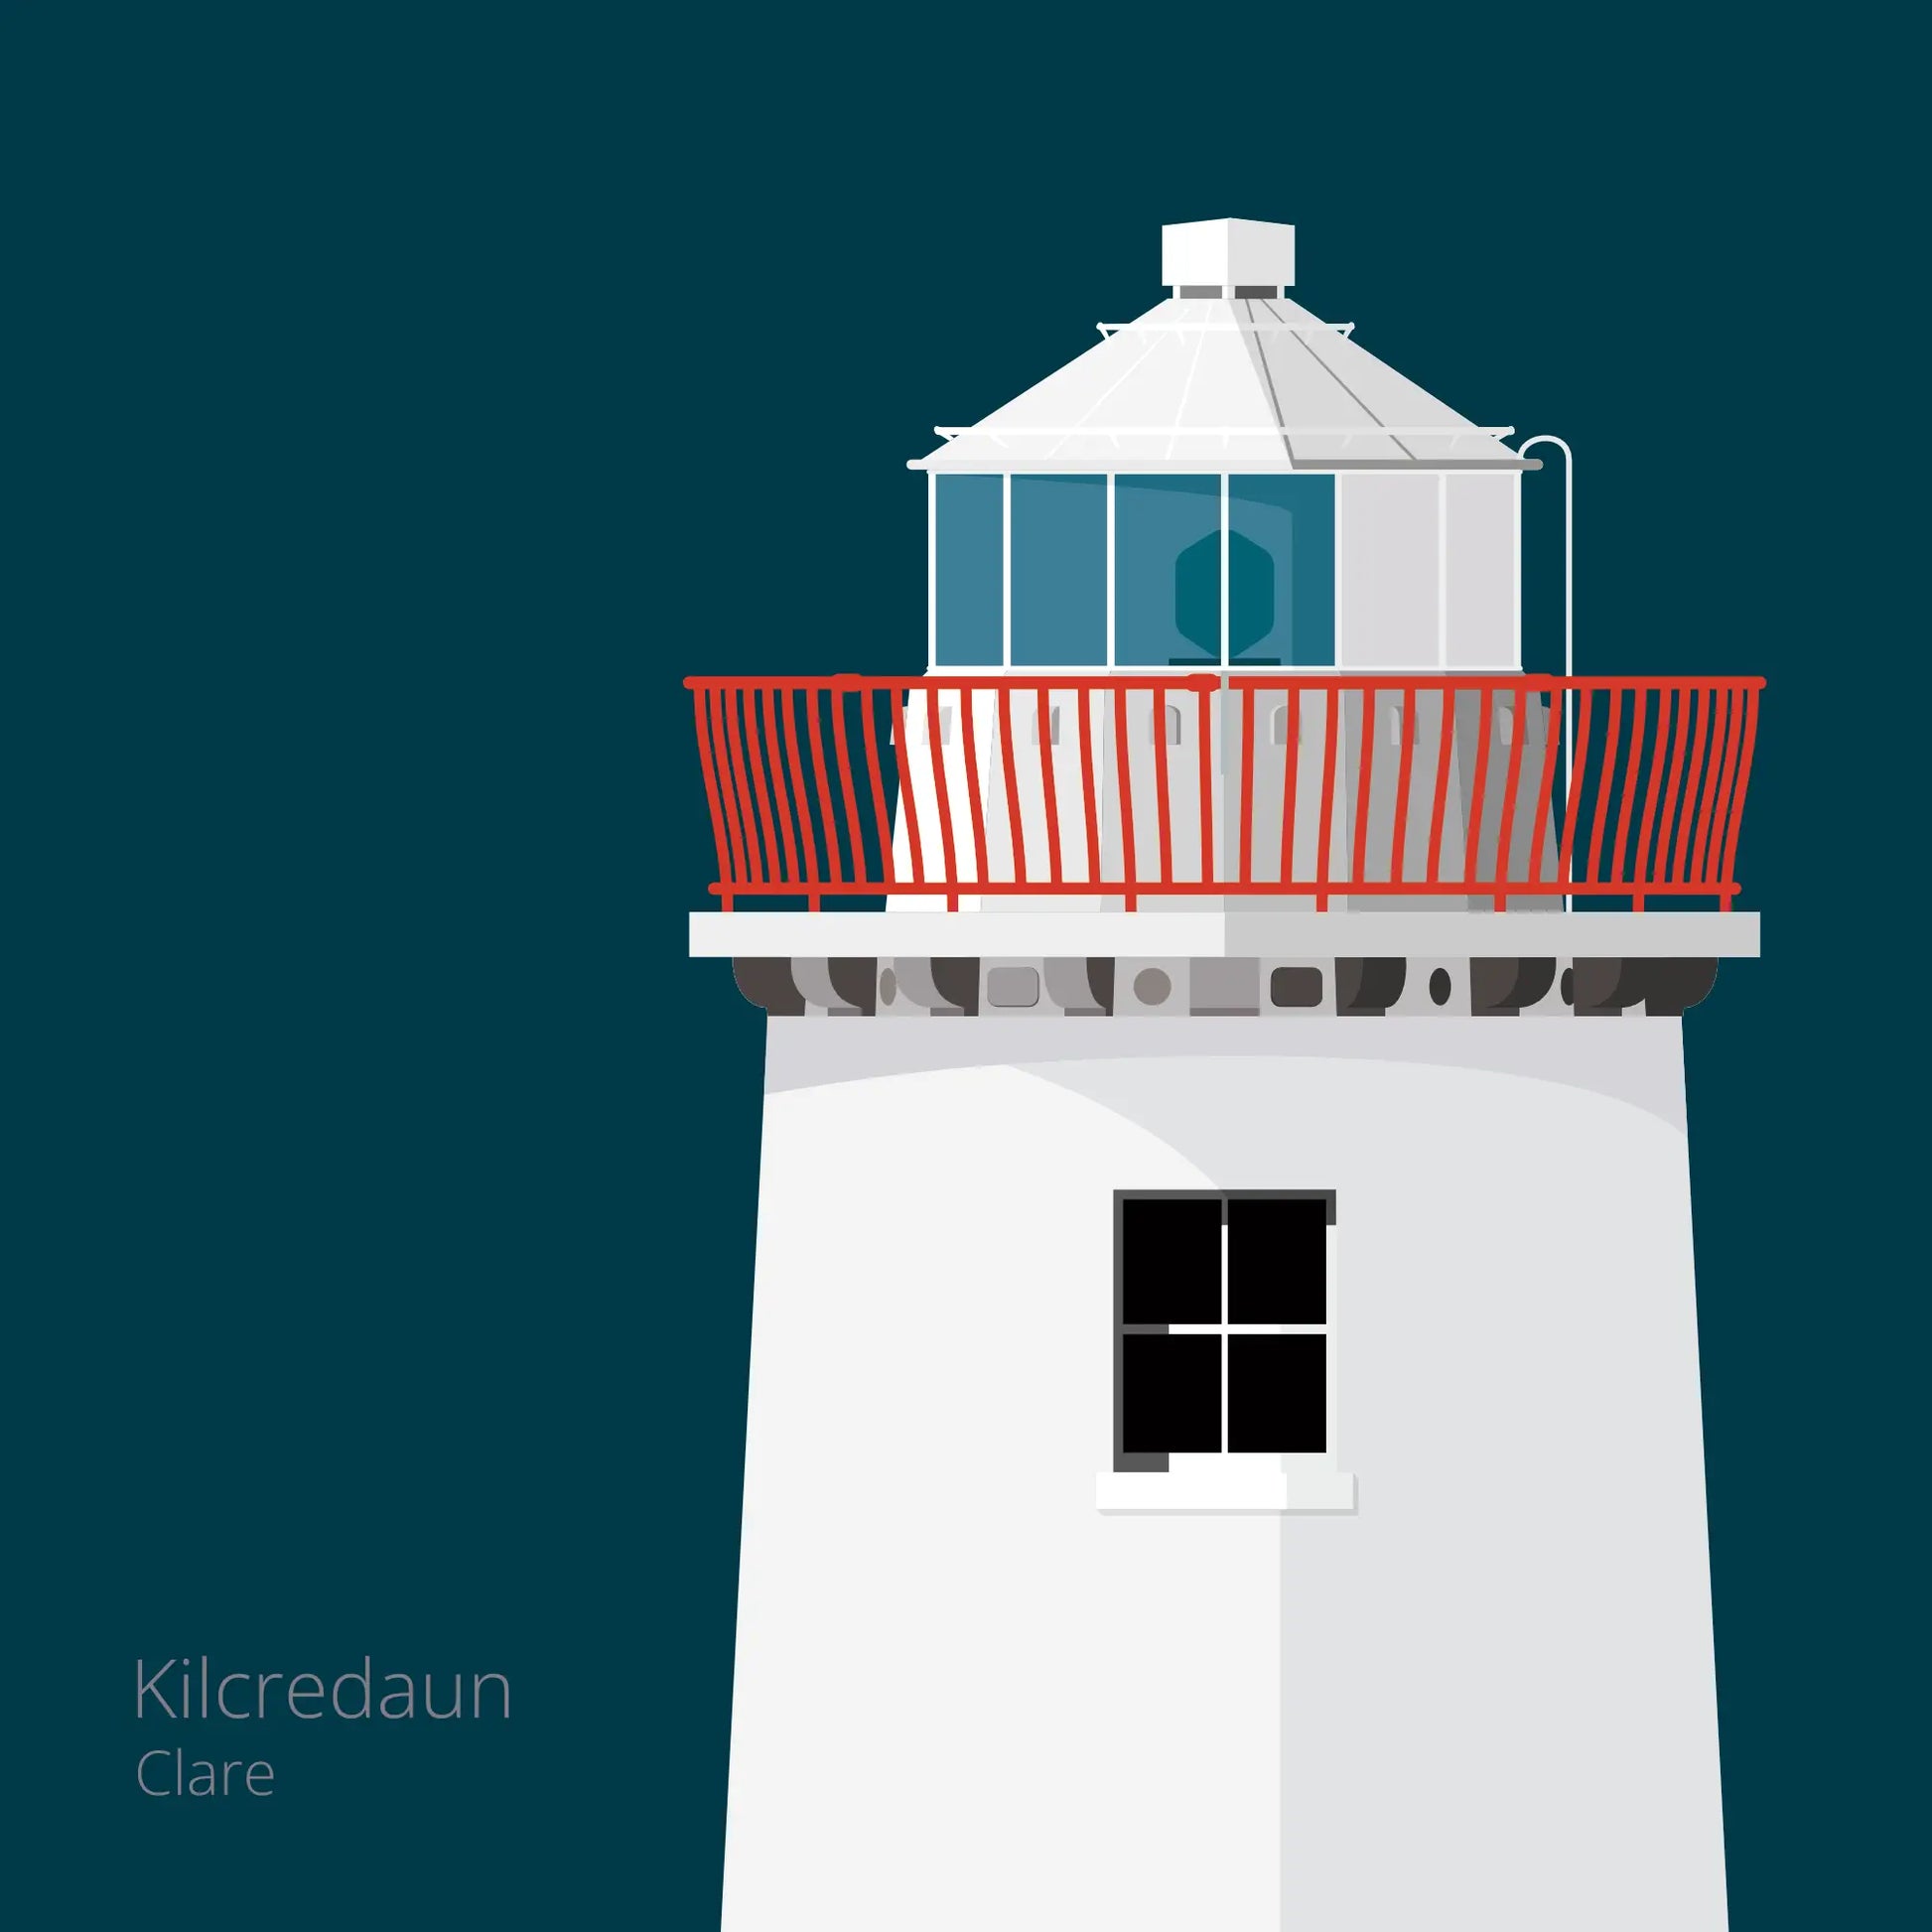 Illustration of Kilcredaun lighthouse on a midnight blue background